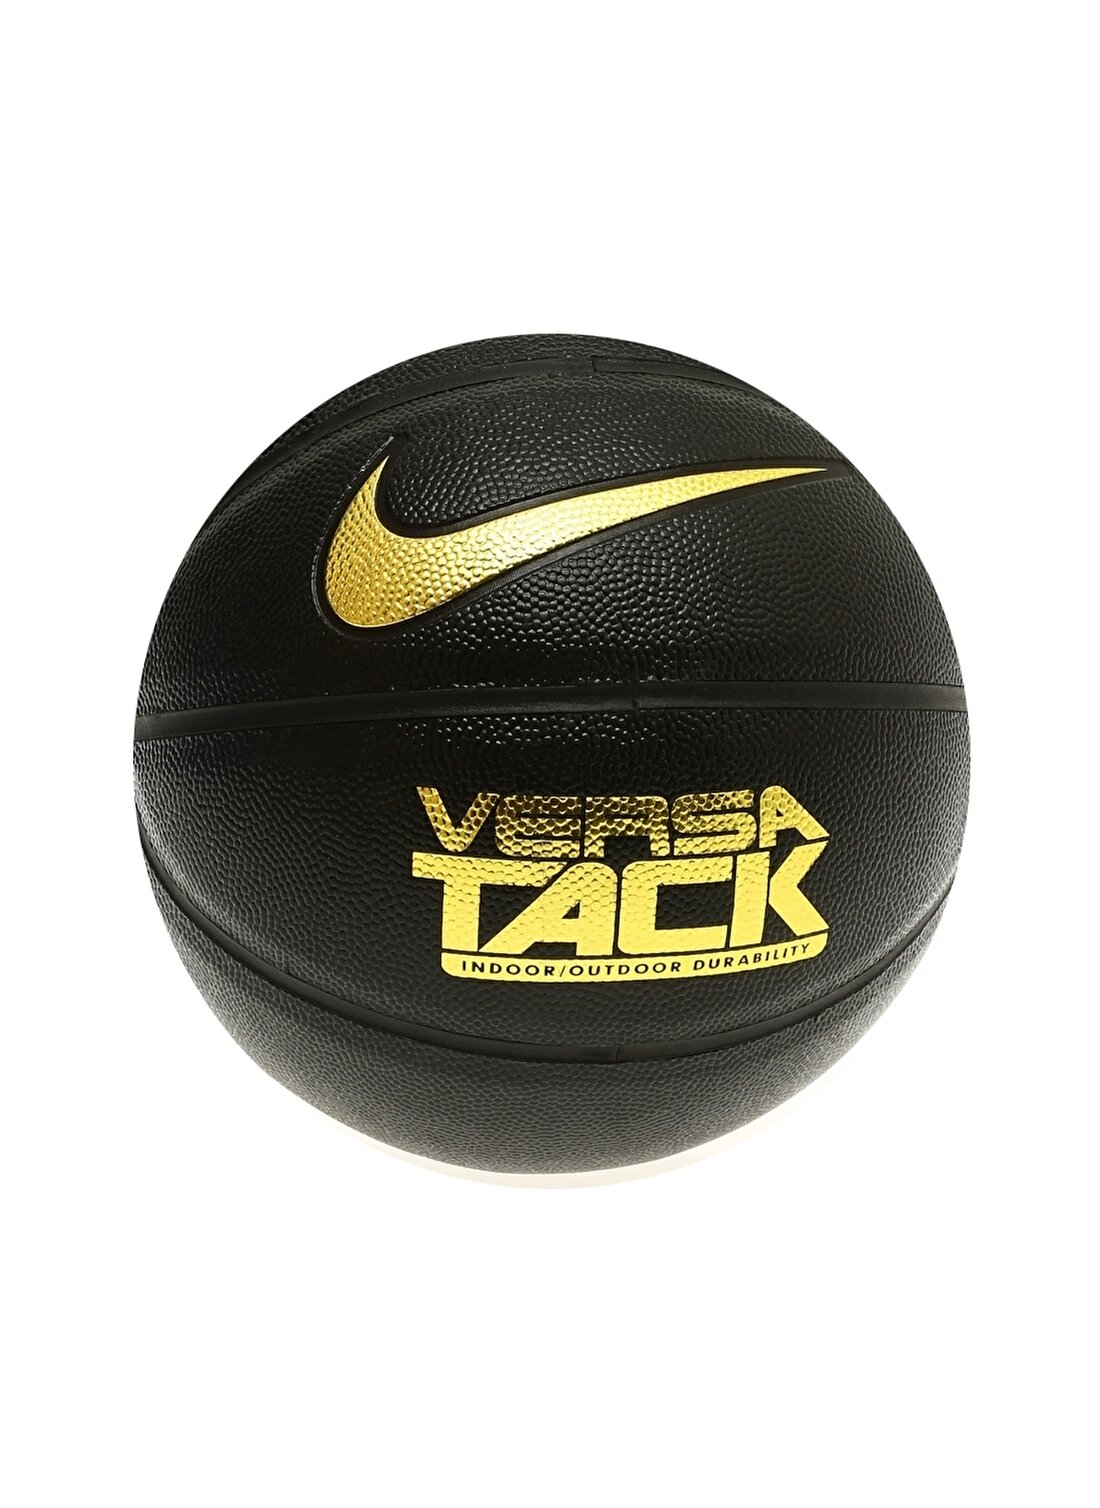 Nike Versa Tack Top Basketbol Topu